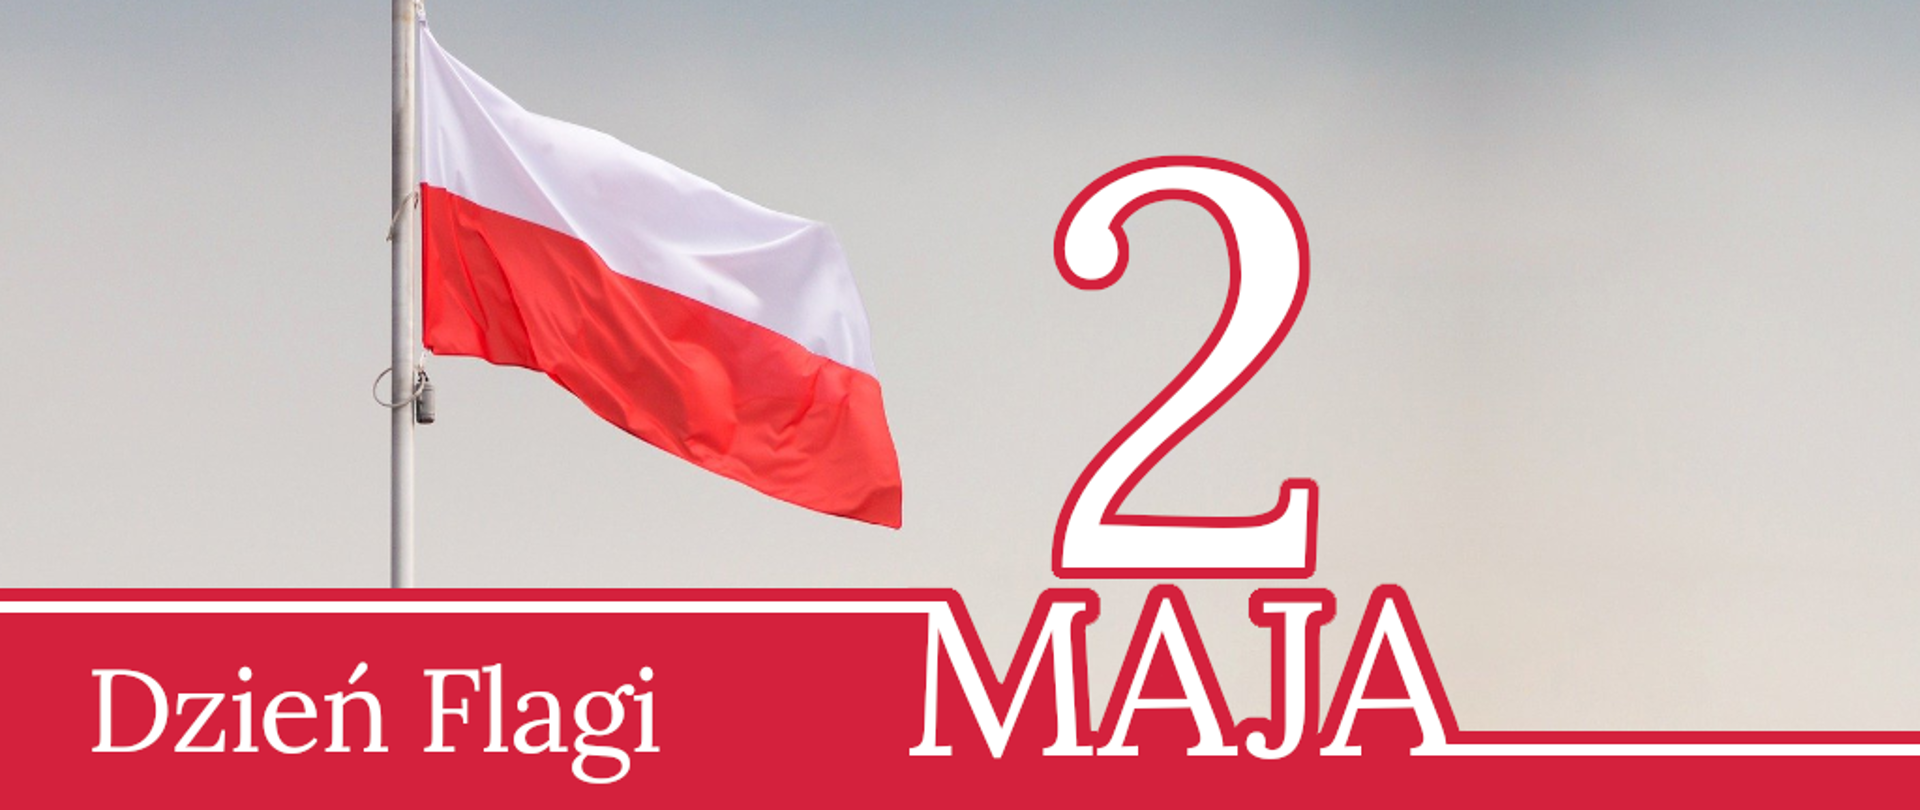 2 Maja - Dzień Flagi